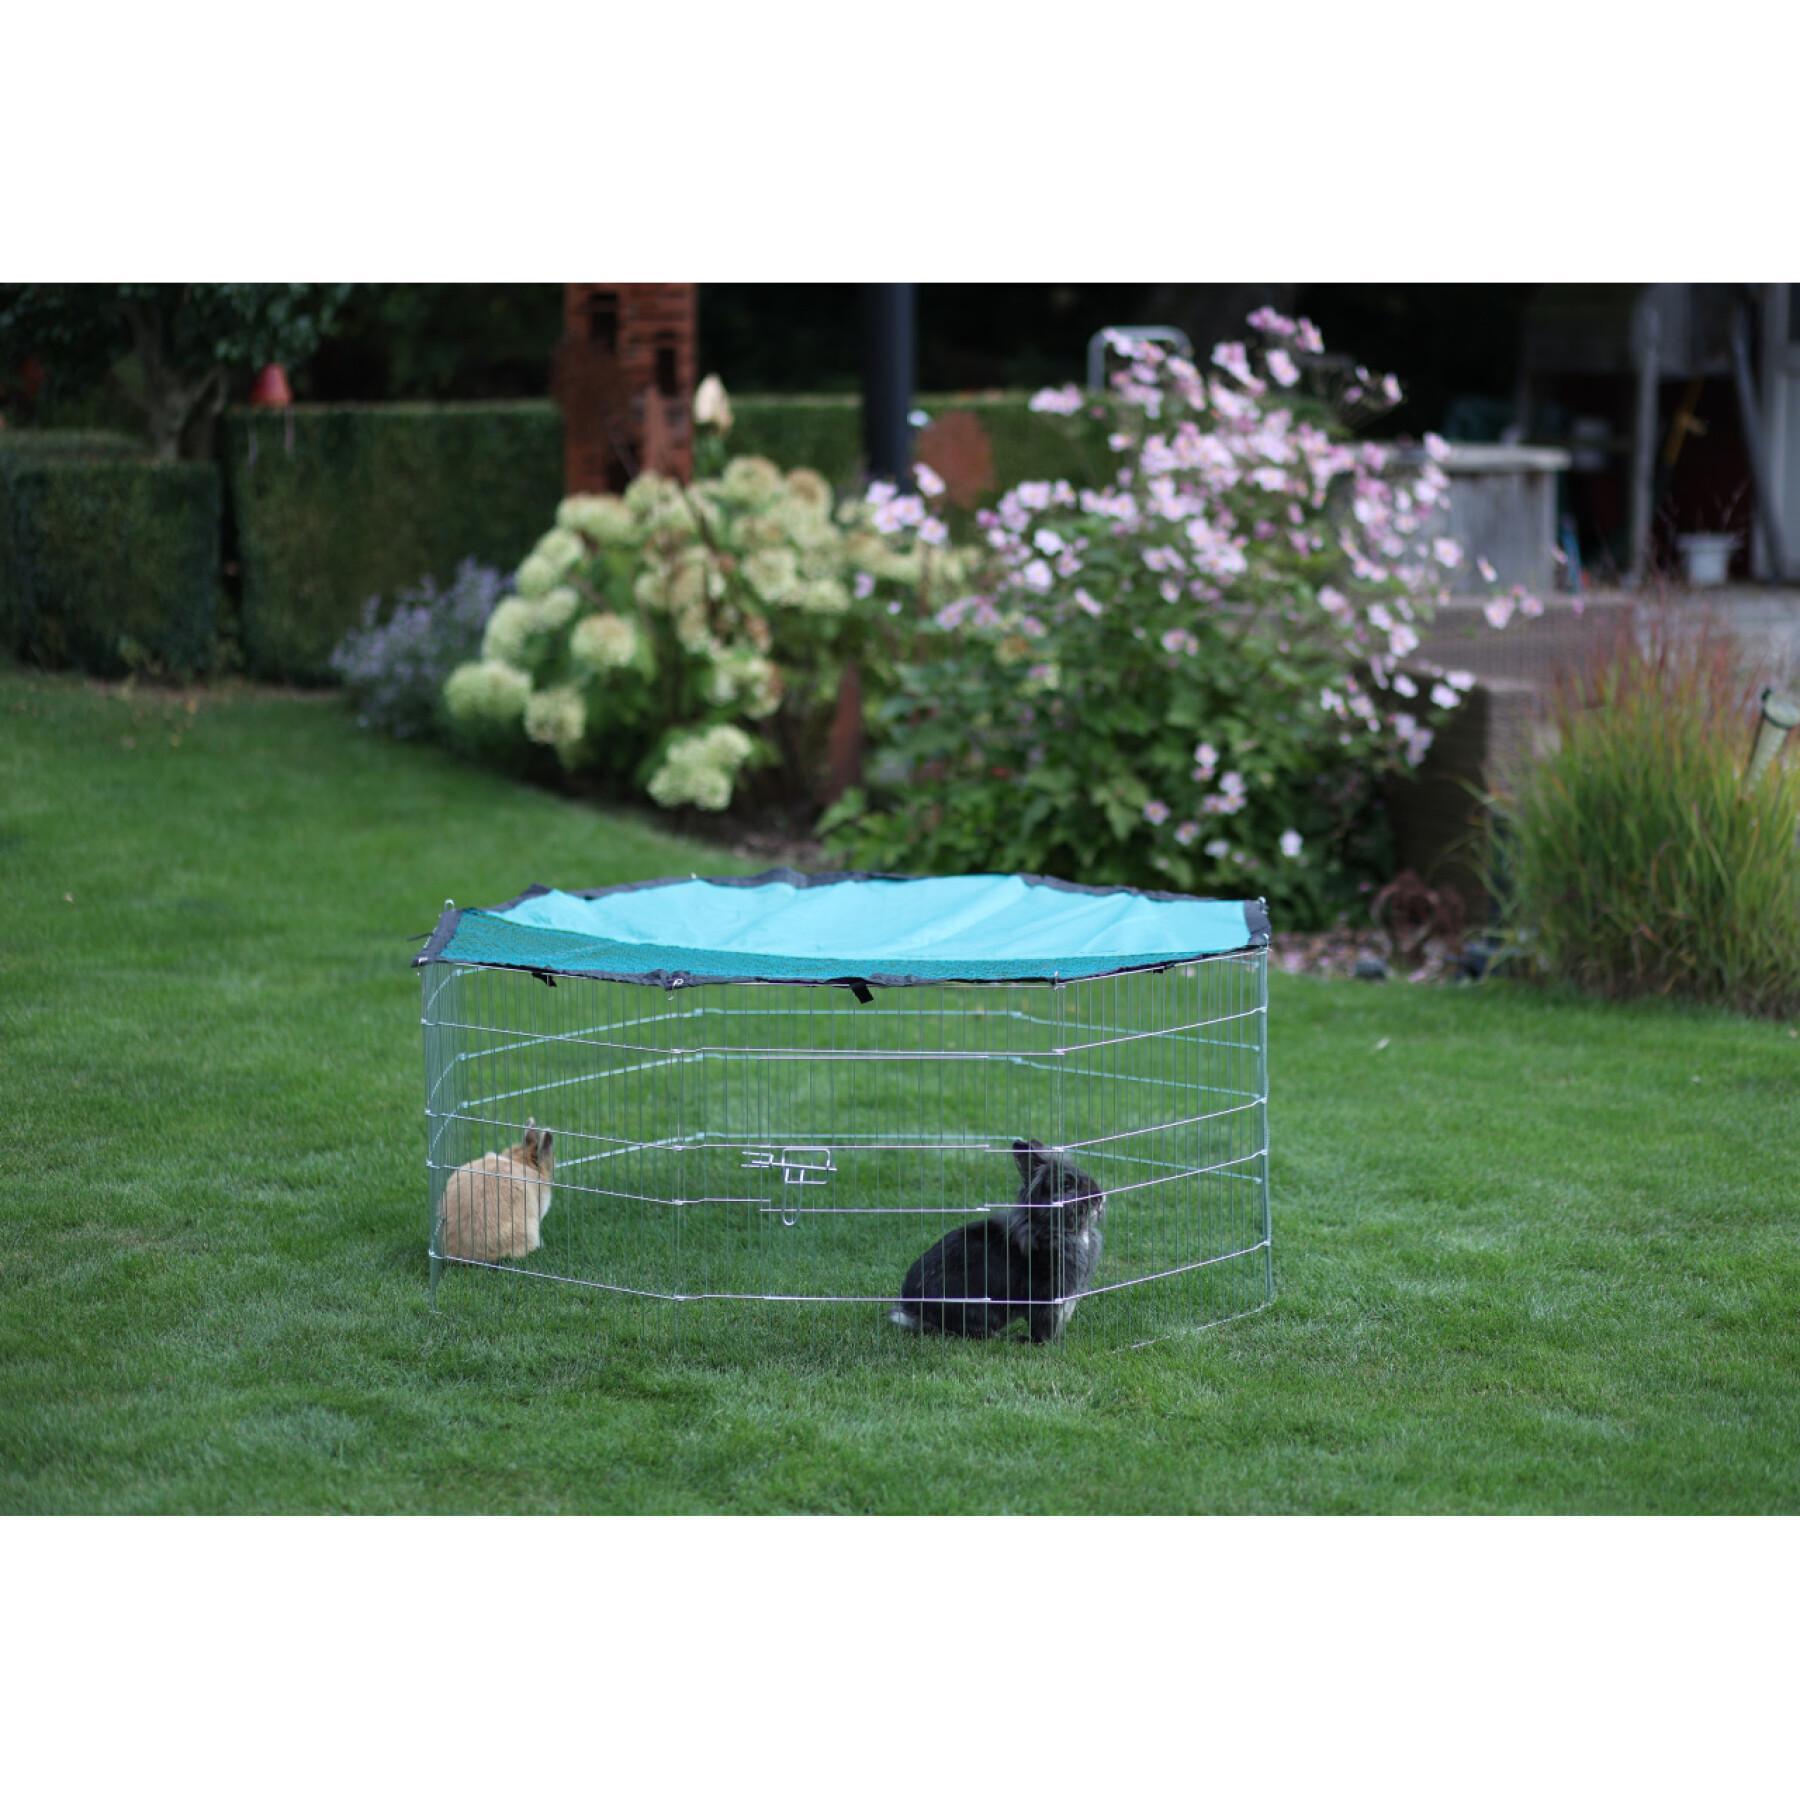 Hexagonal outdoor enclosure for rodents Kerbl